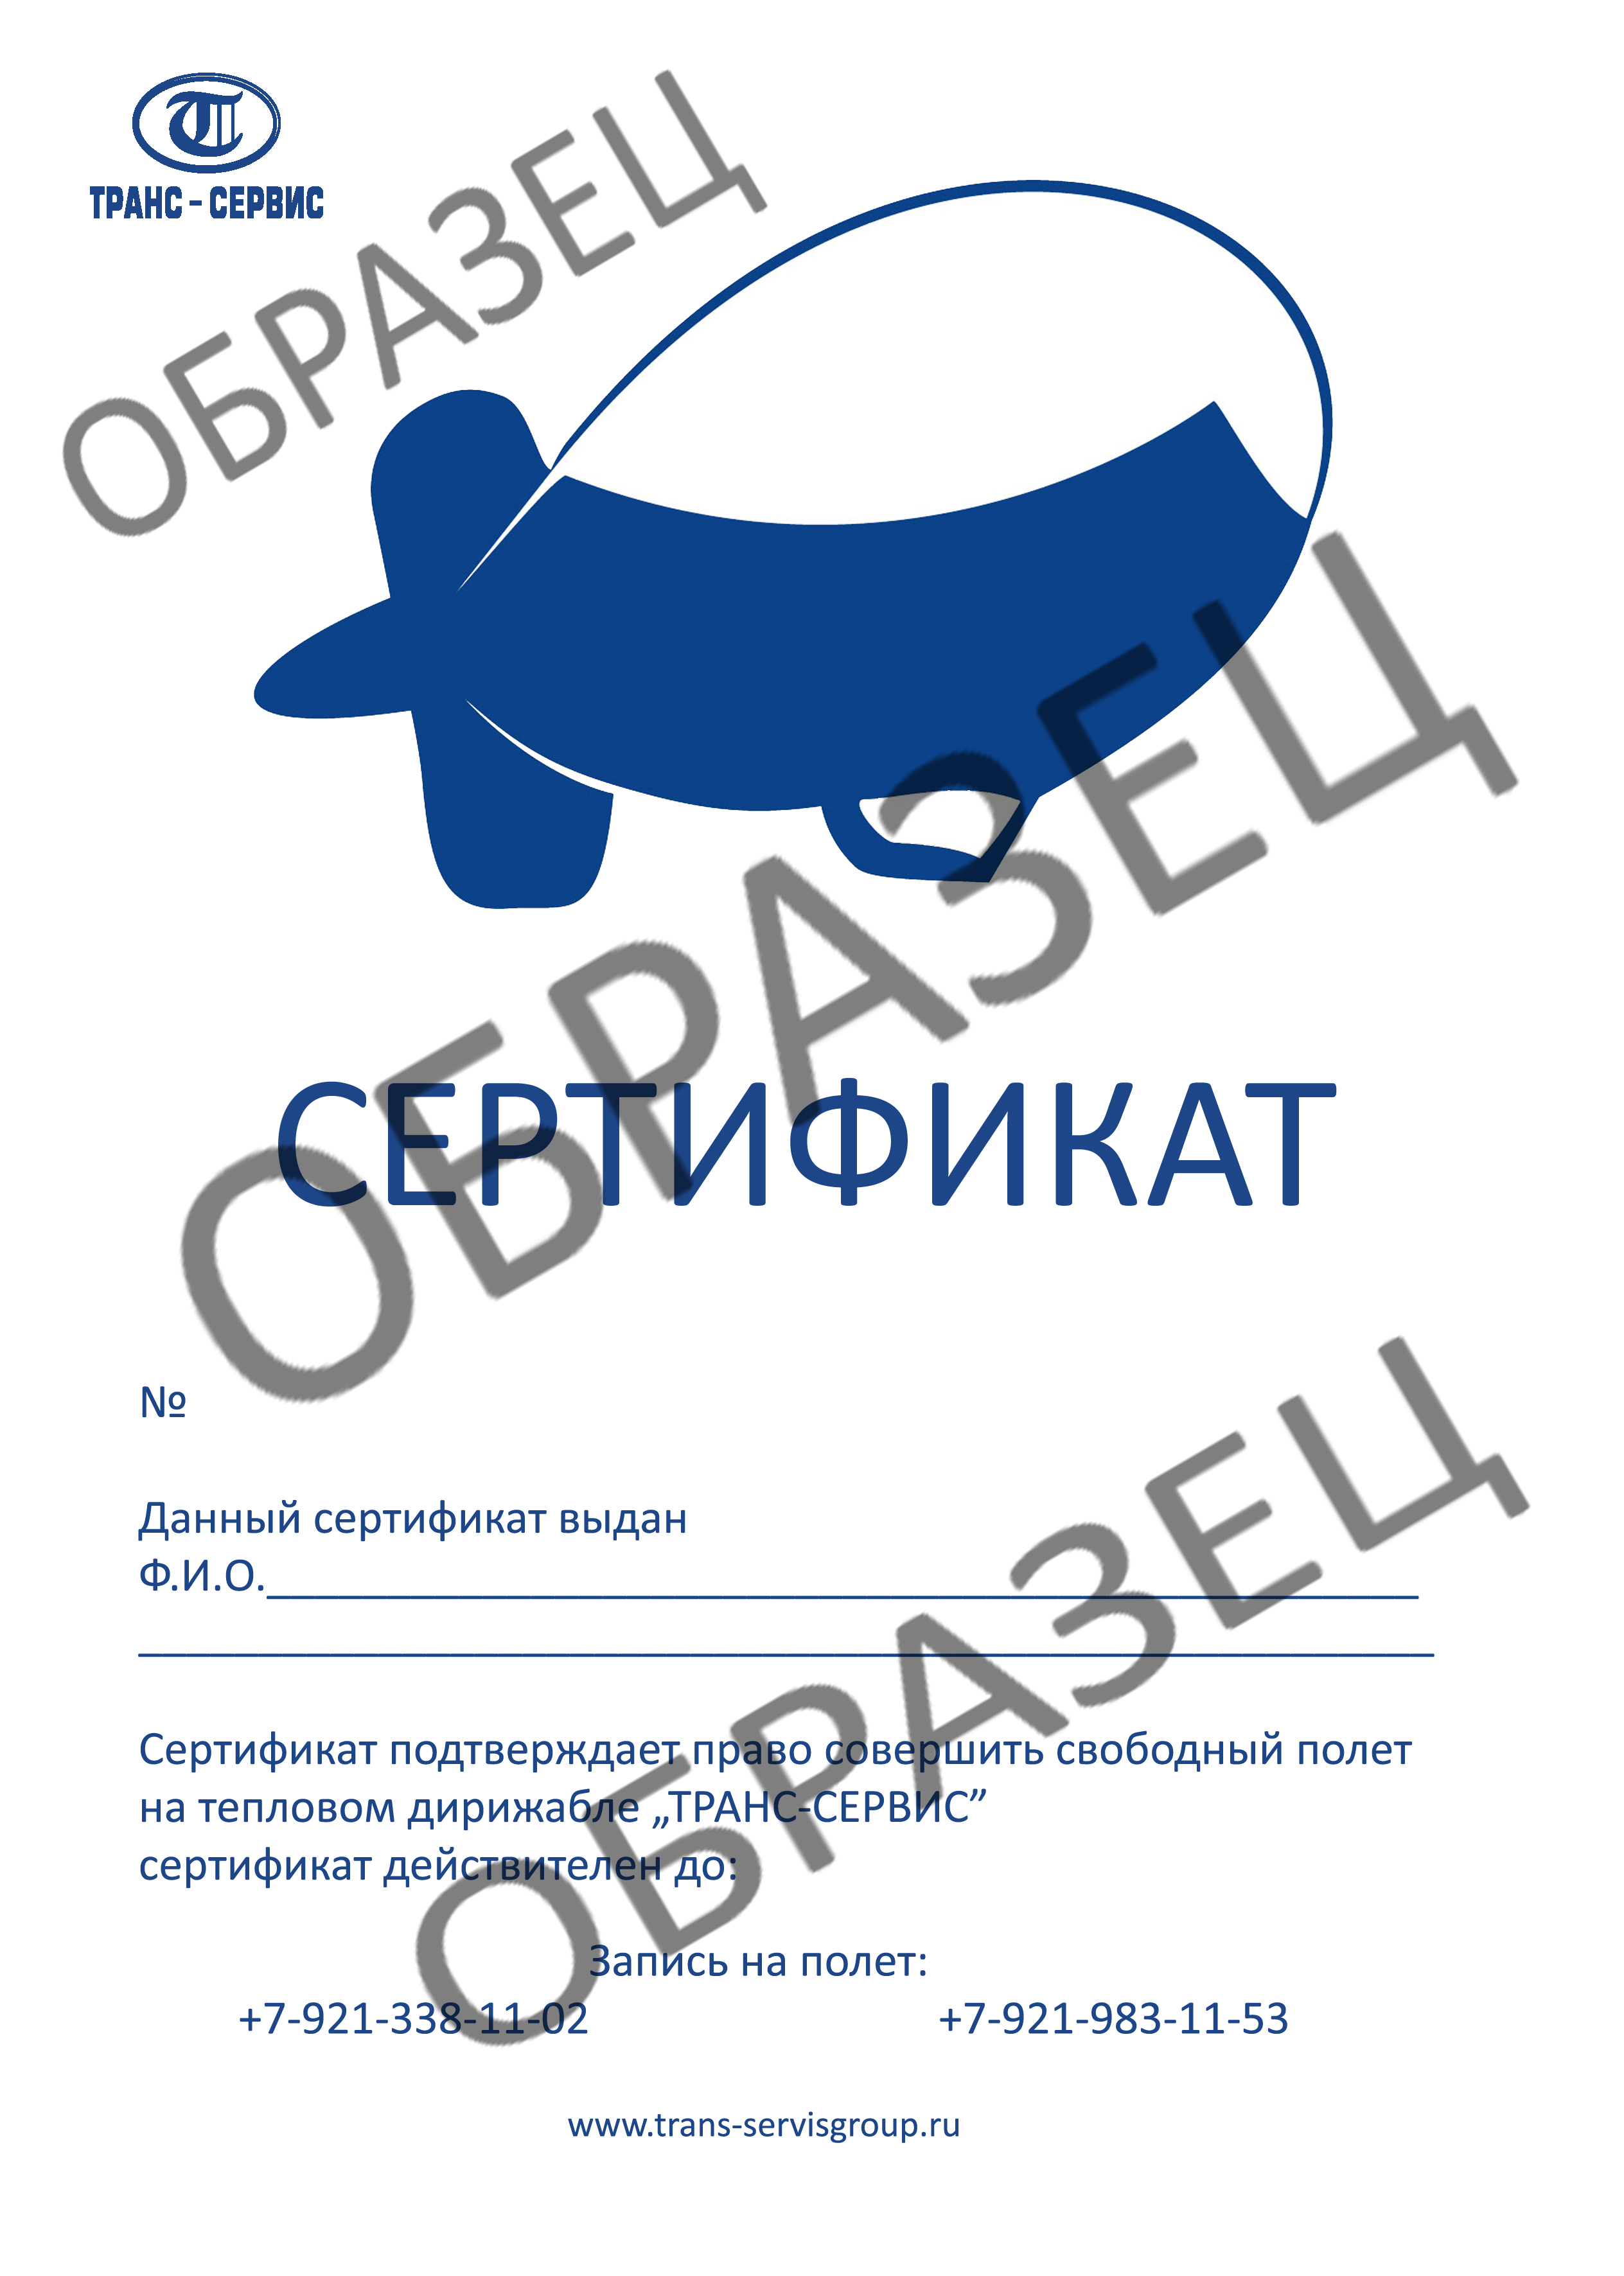 sertifikat_na_polet_na_dirizhable